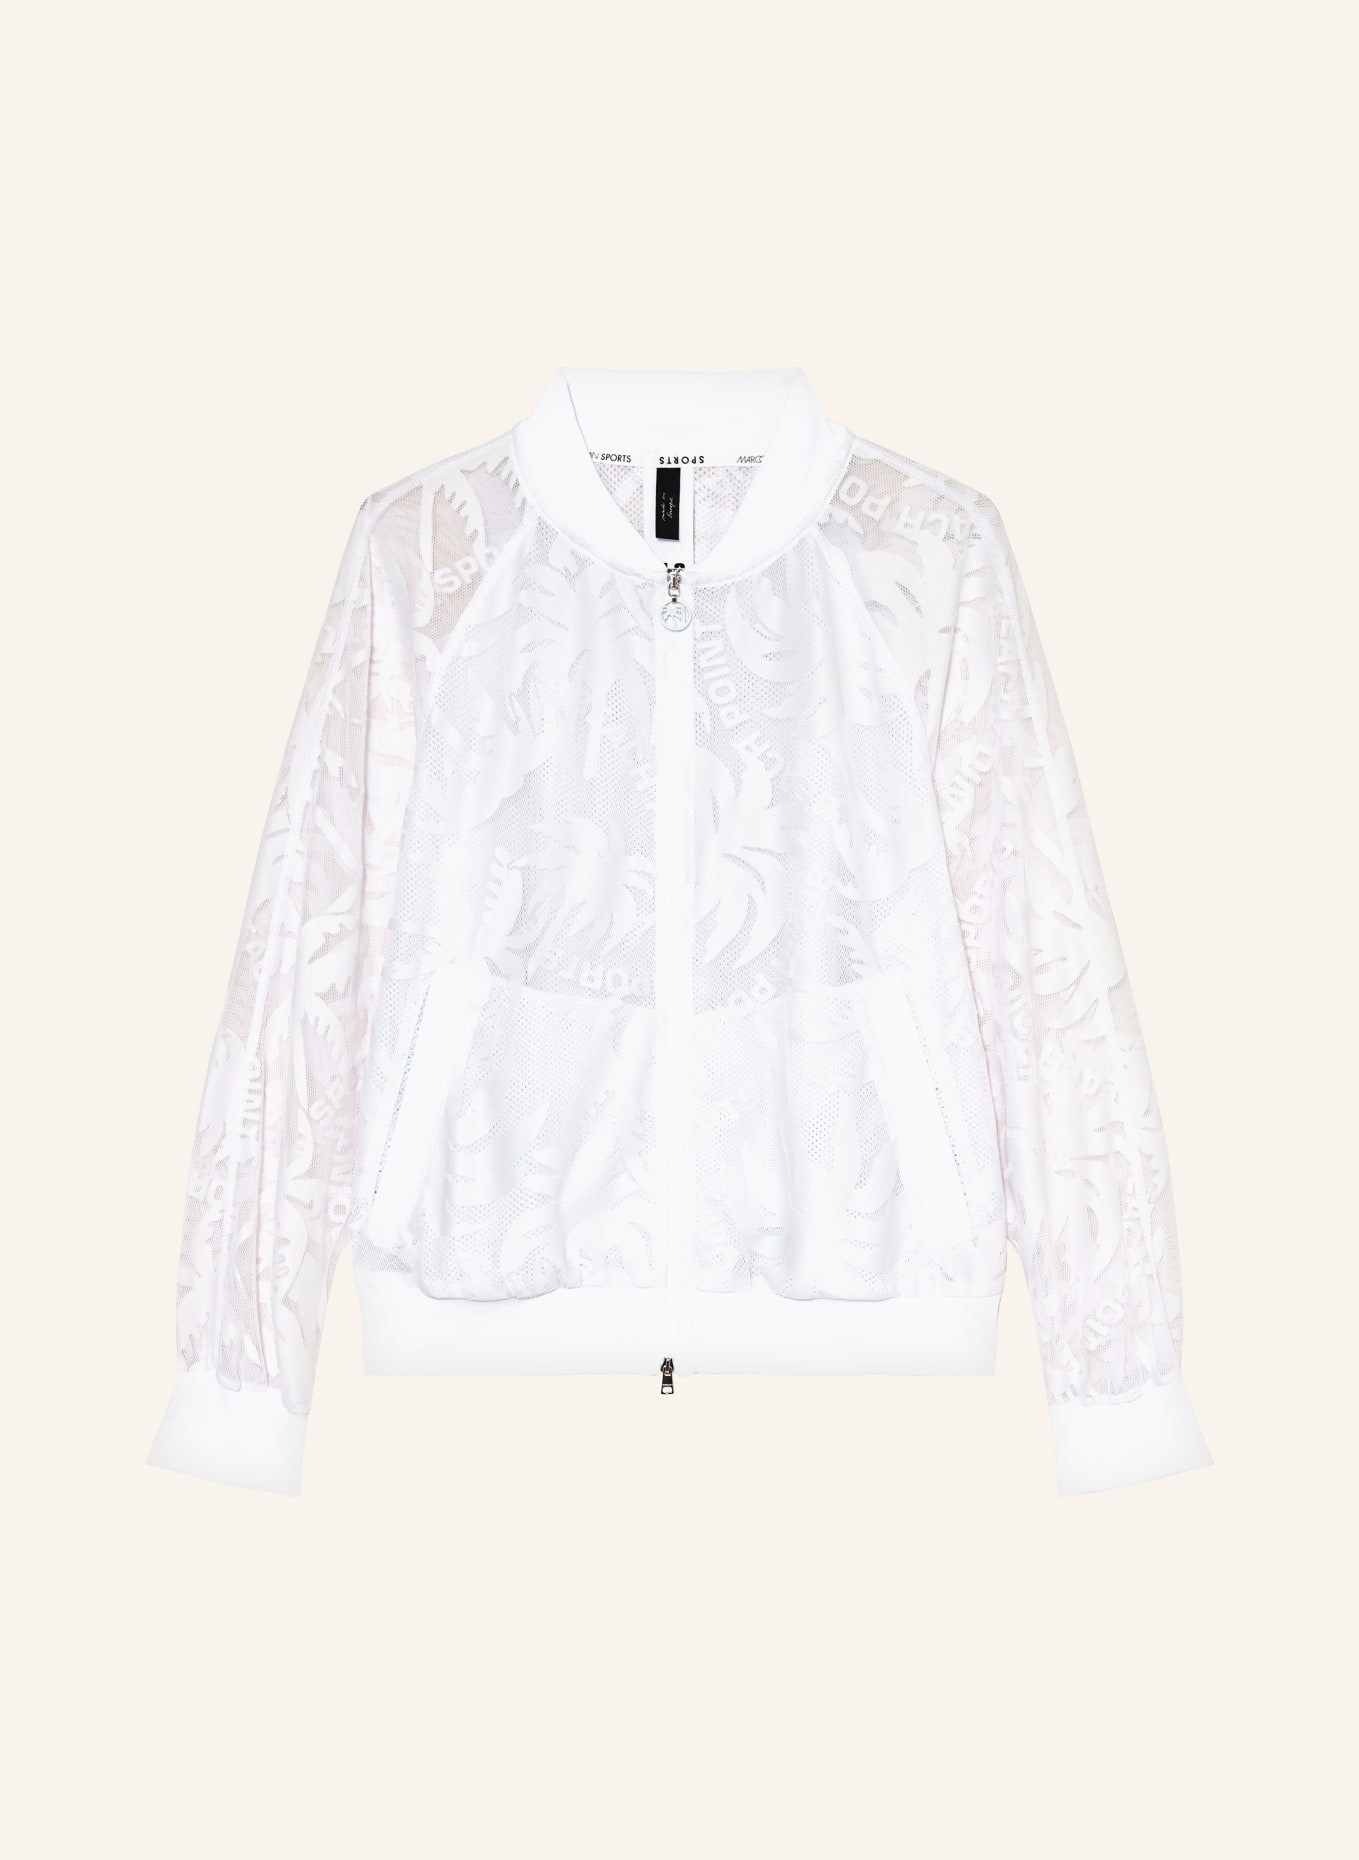 MARC CAIN Mesh-Jacke, Farbe: 100 WHITE (Bild 1)